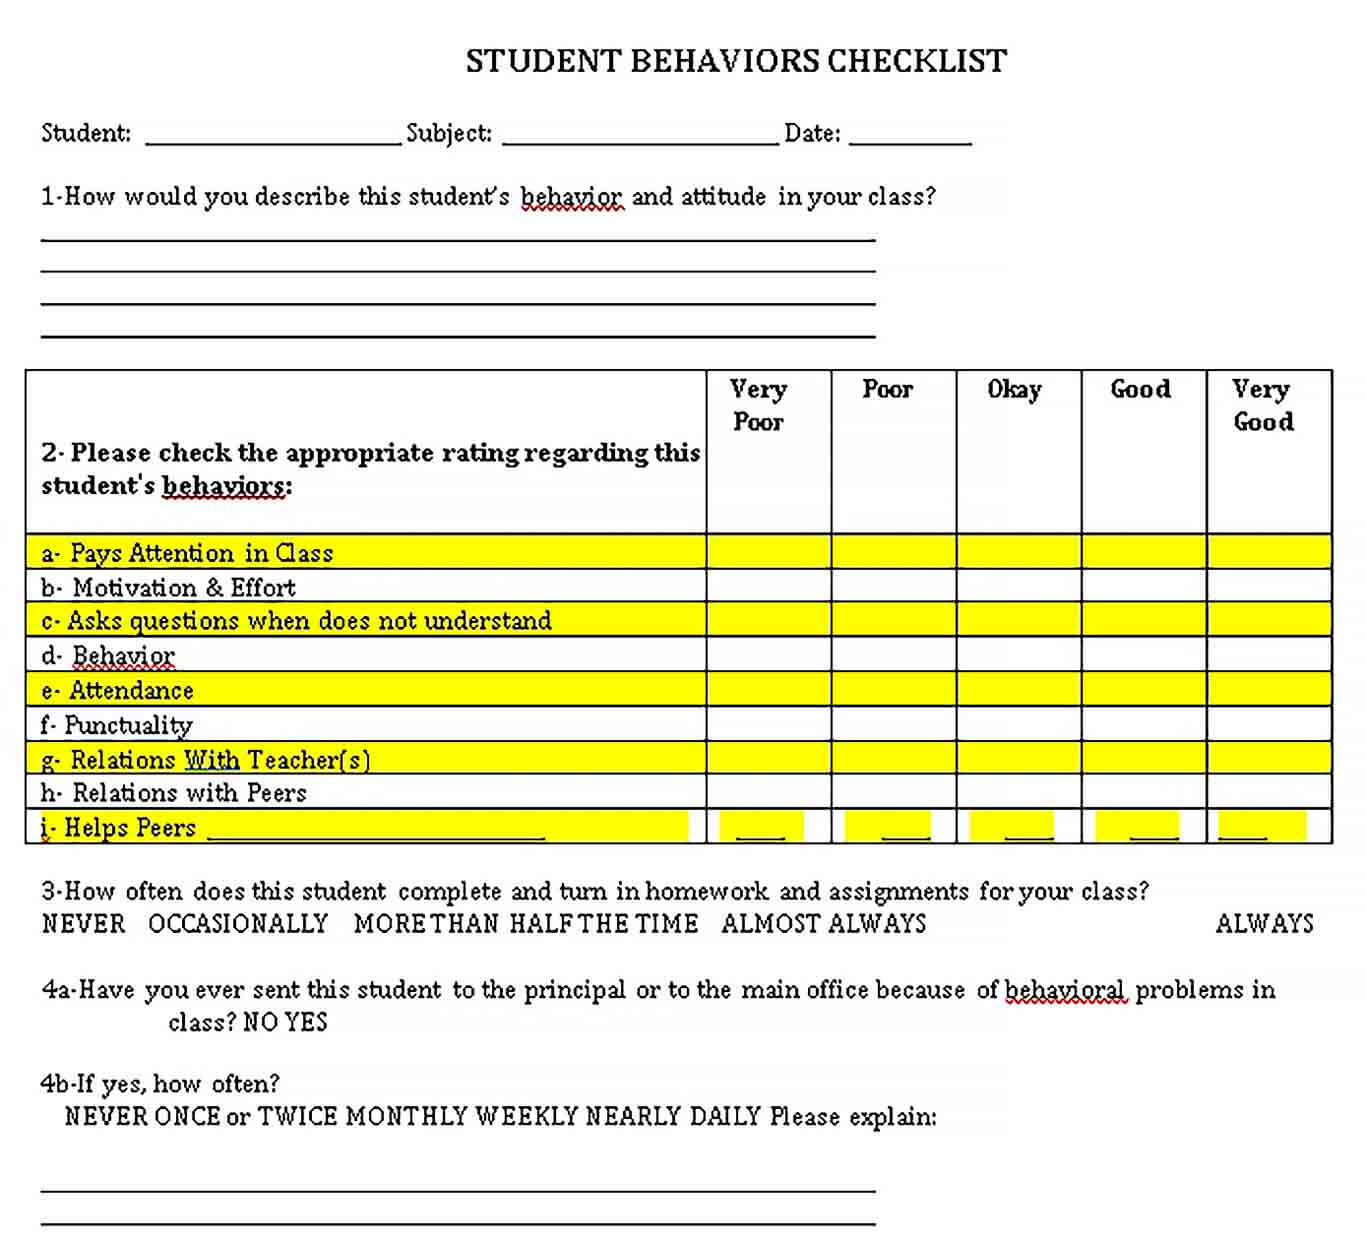 Sample Student Behavior Checklist Template